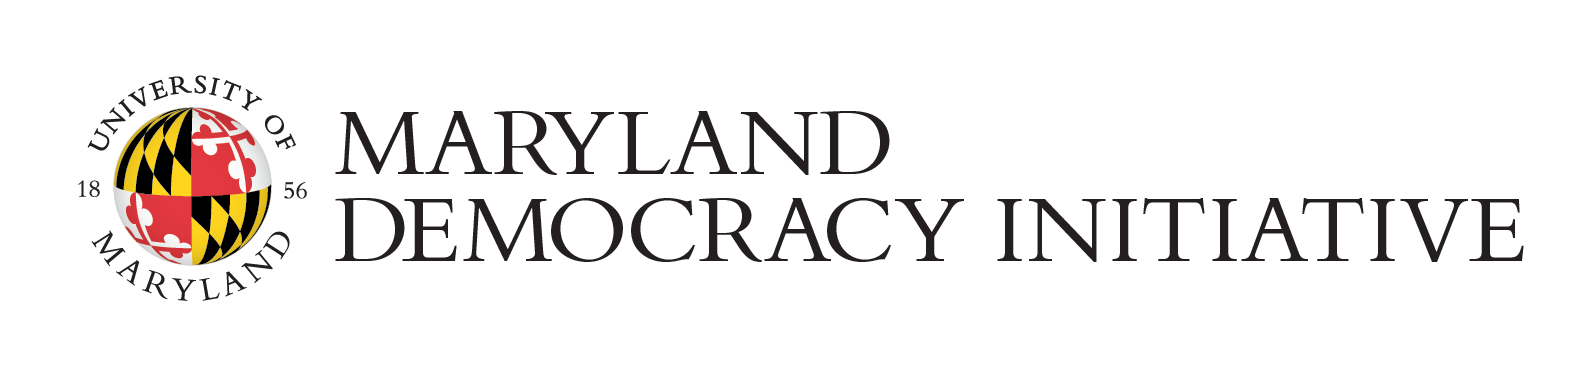 Maryland Democracy Initiative logo